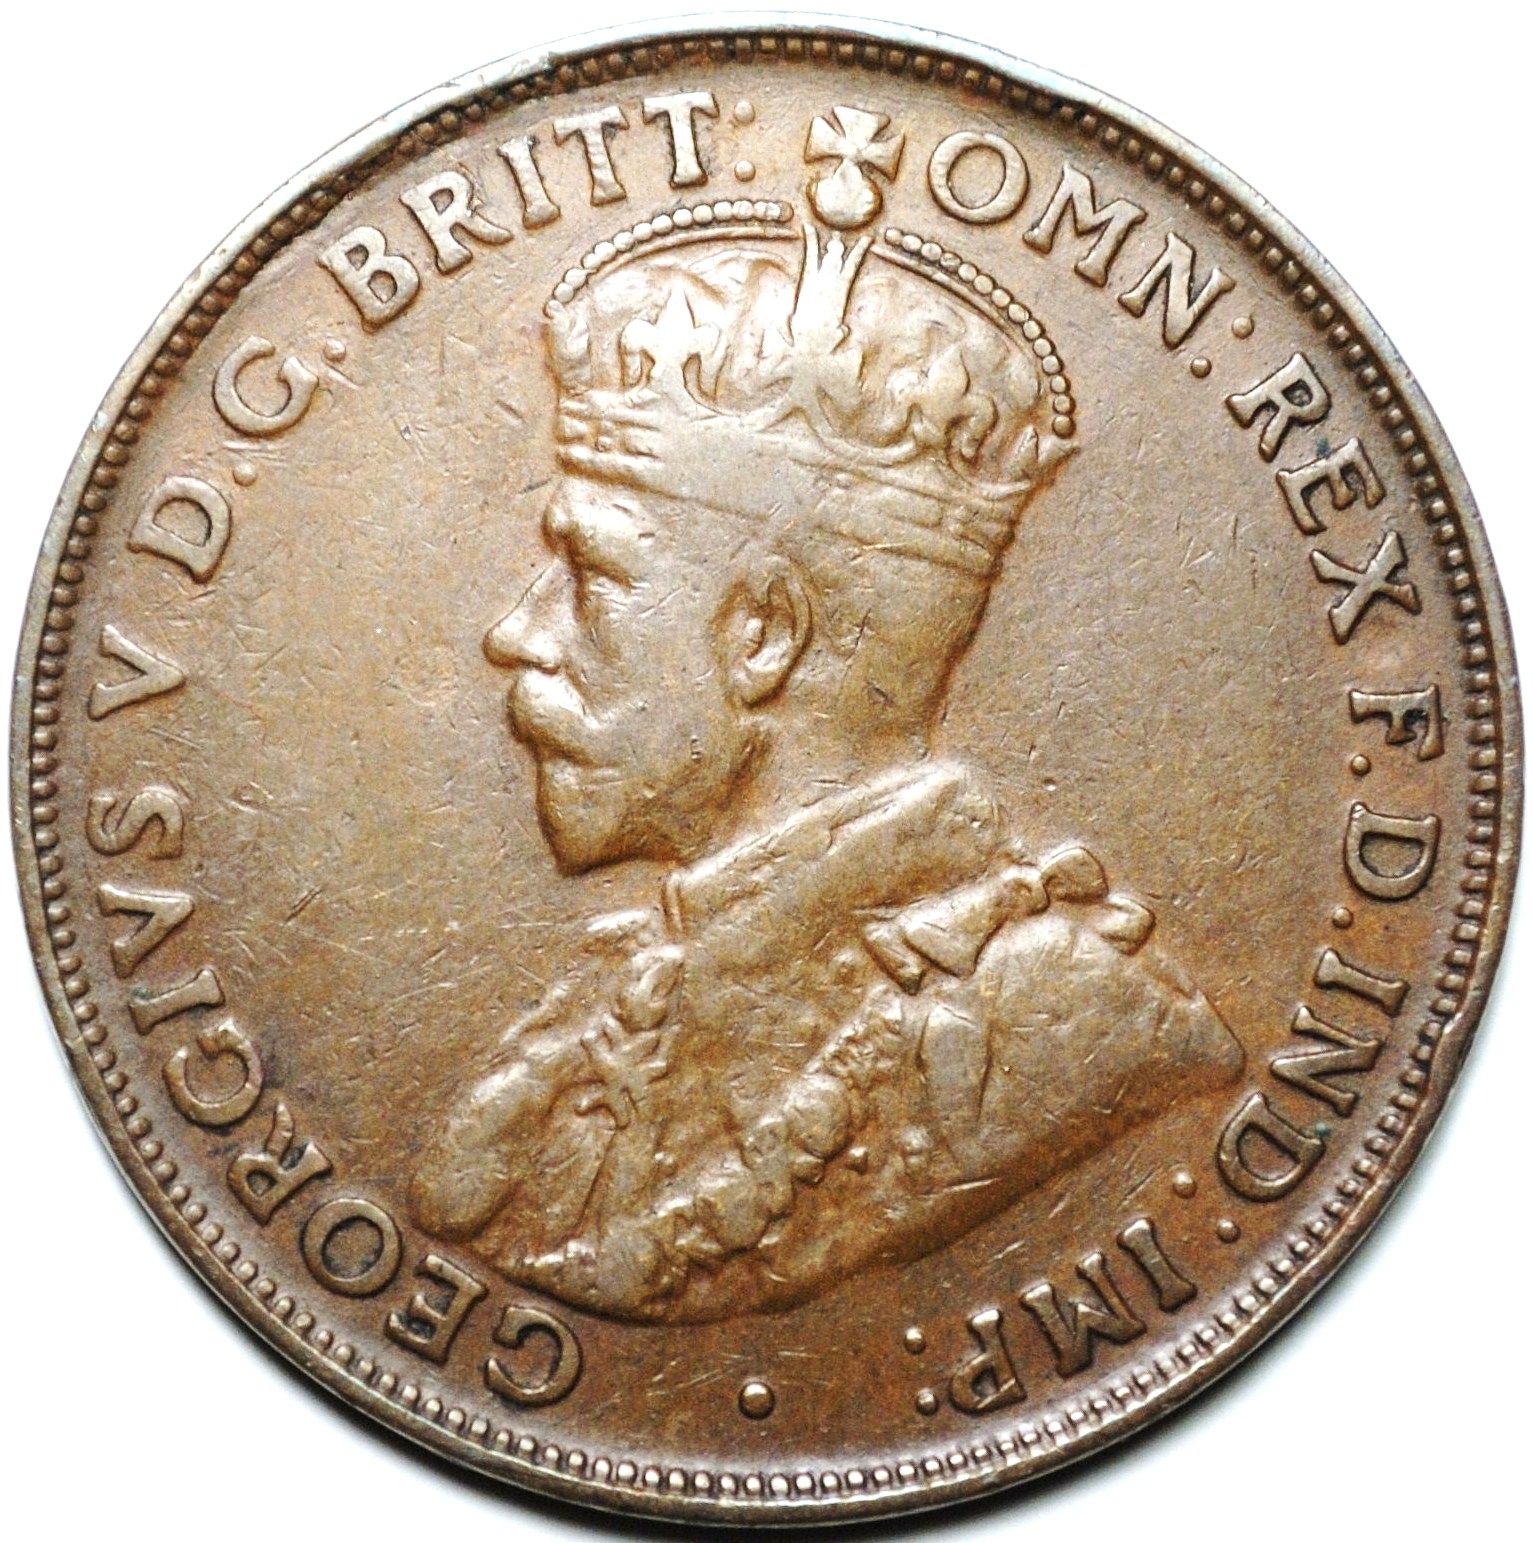 1927 Australian penny, Indian obverse variety, obverse